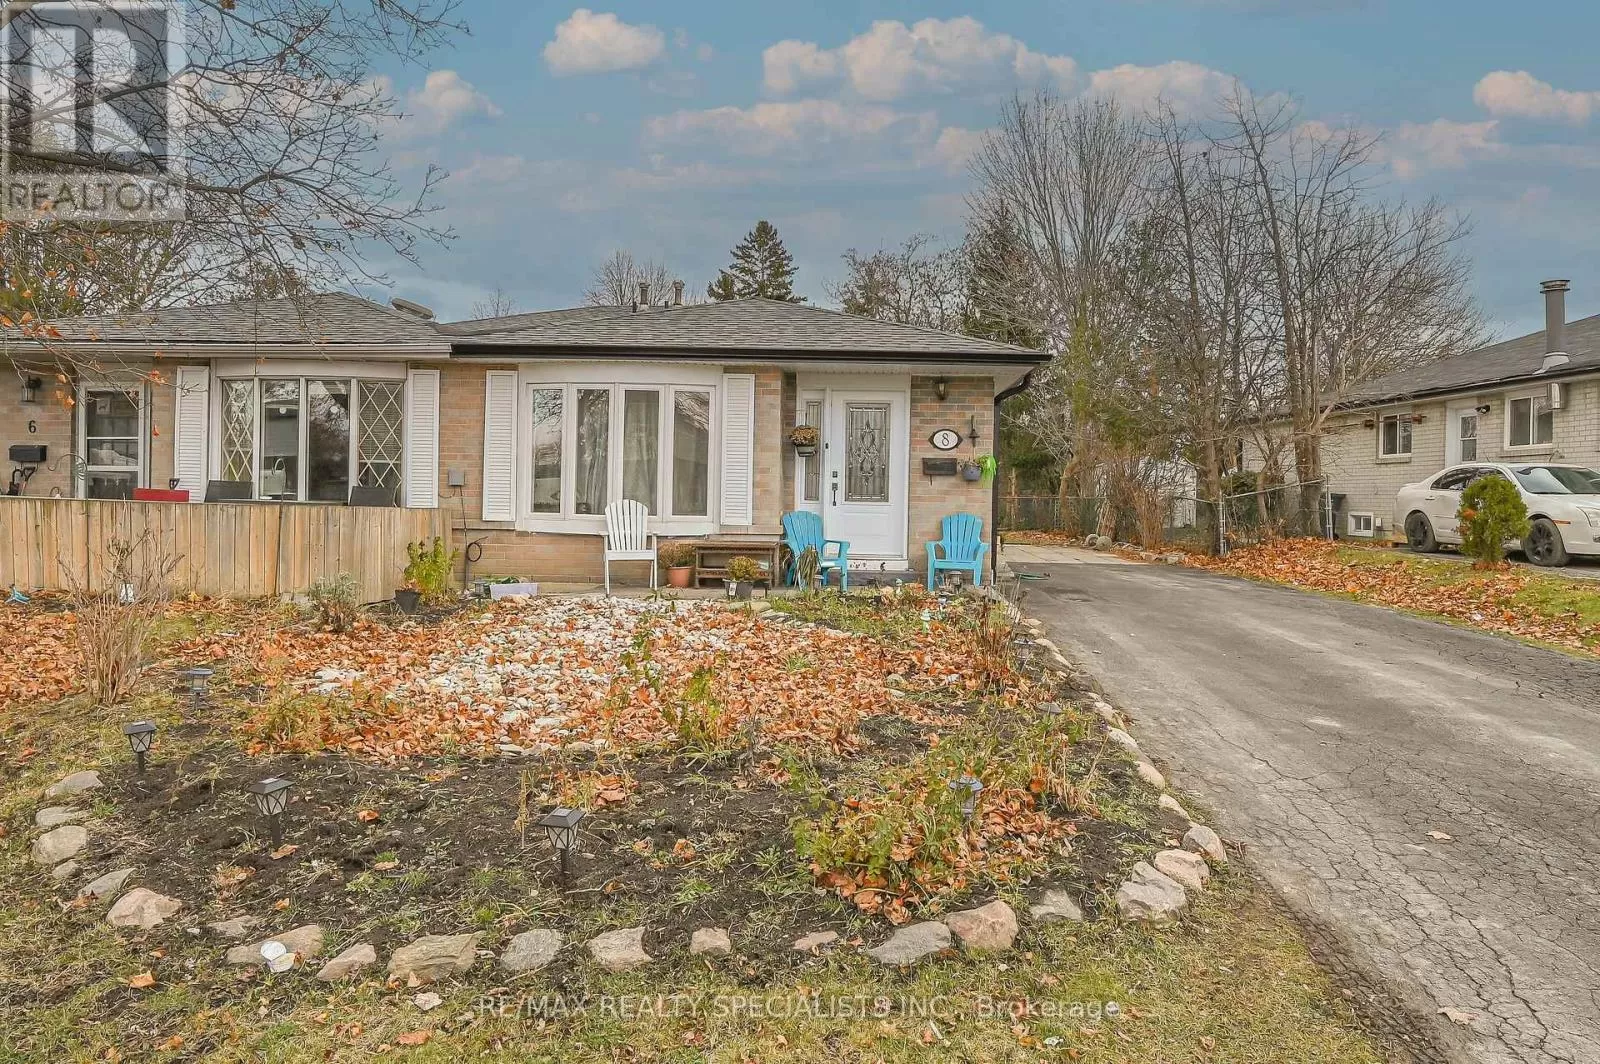 House for rent: 8 Gulliver Cres, Brampton, Ontario L6S 1S9